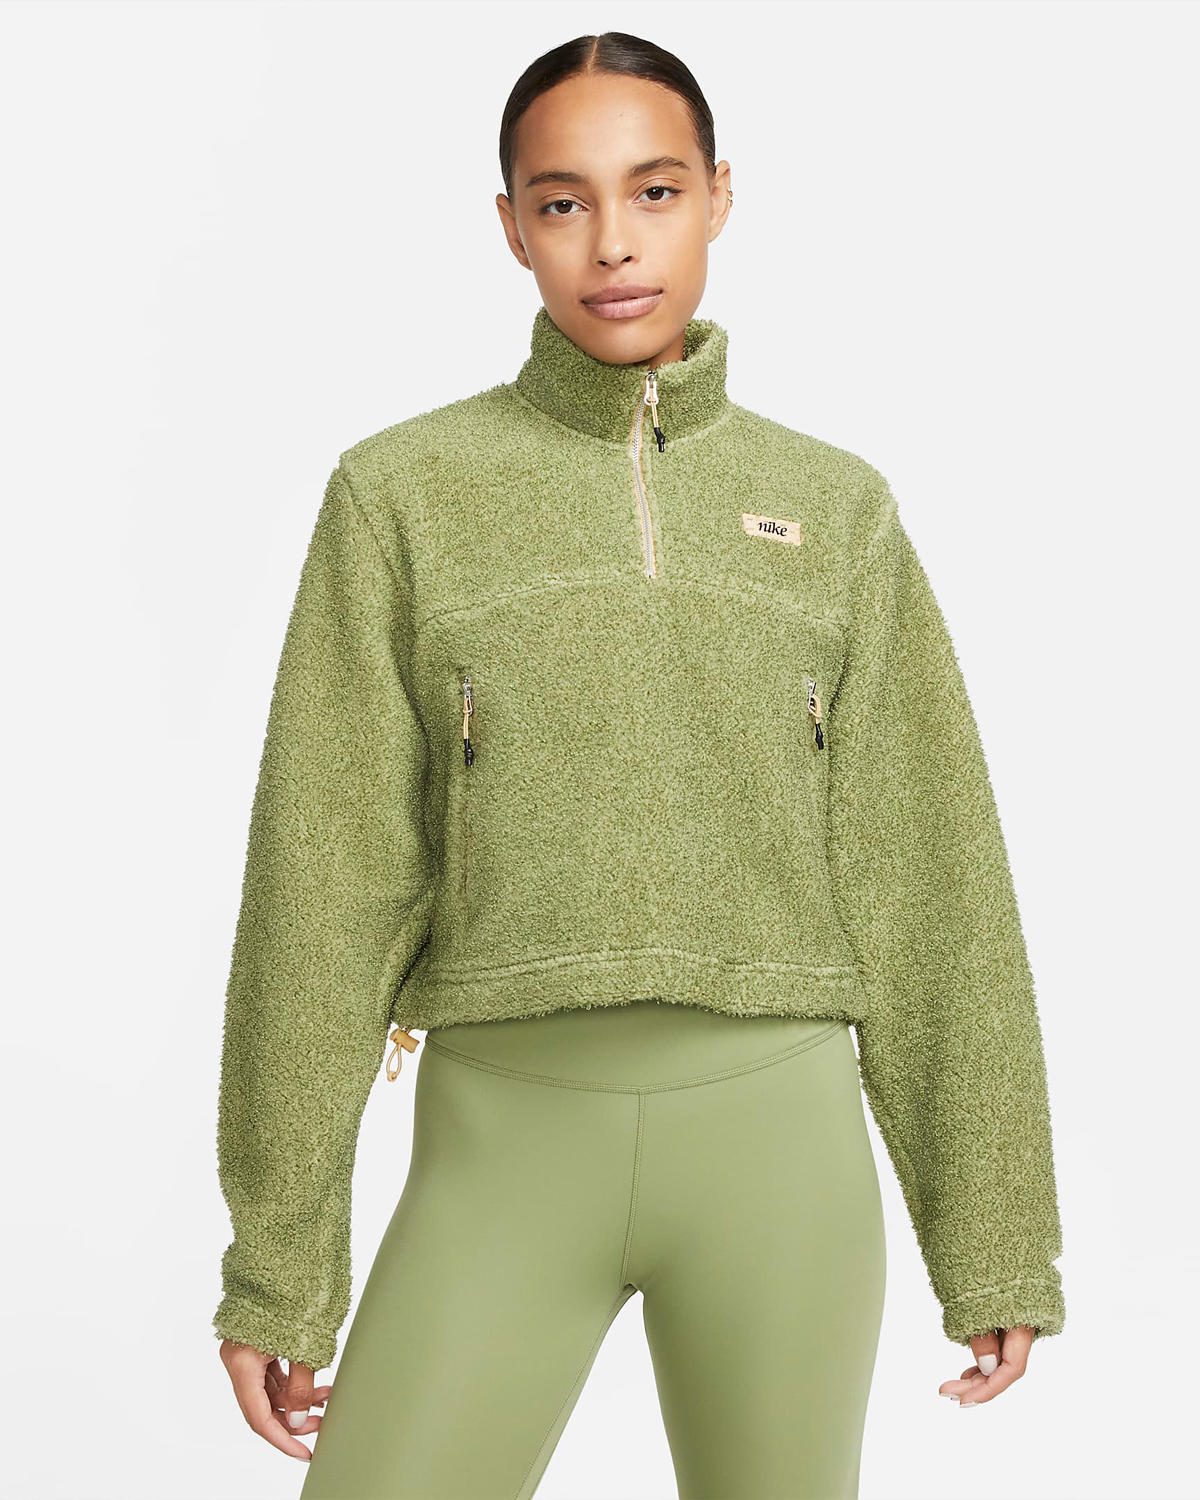 Nike-Womens-Fuzzy-Zip-Top-Alligator-Green